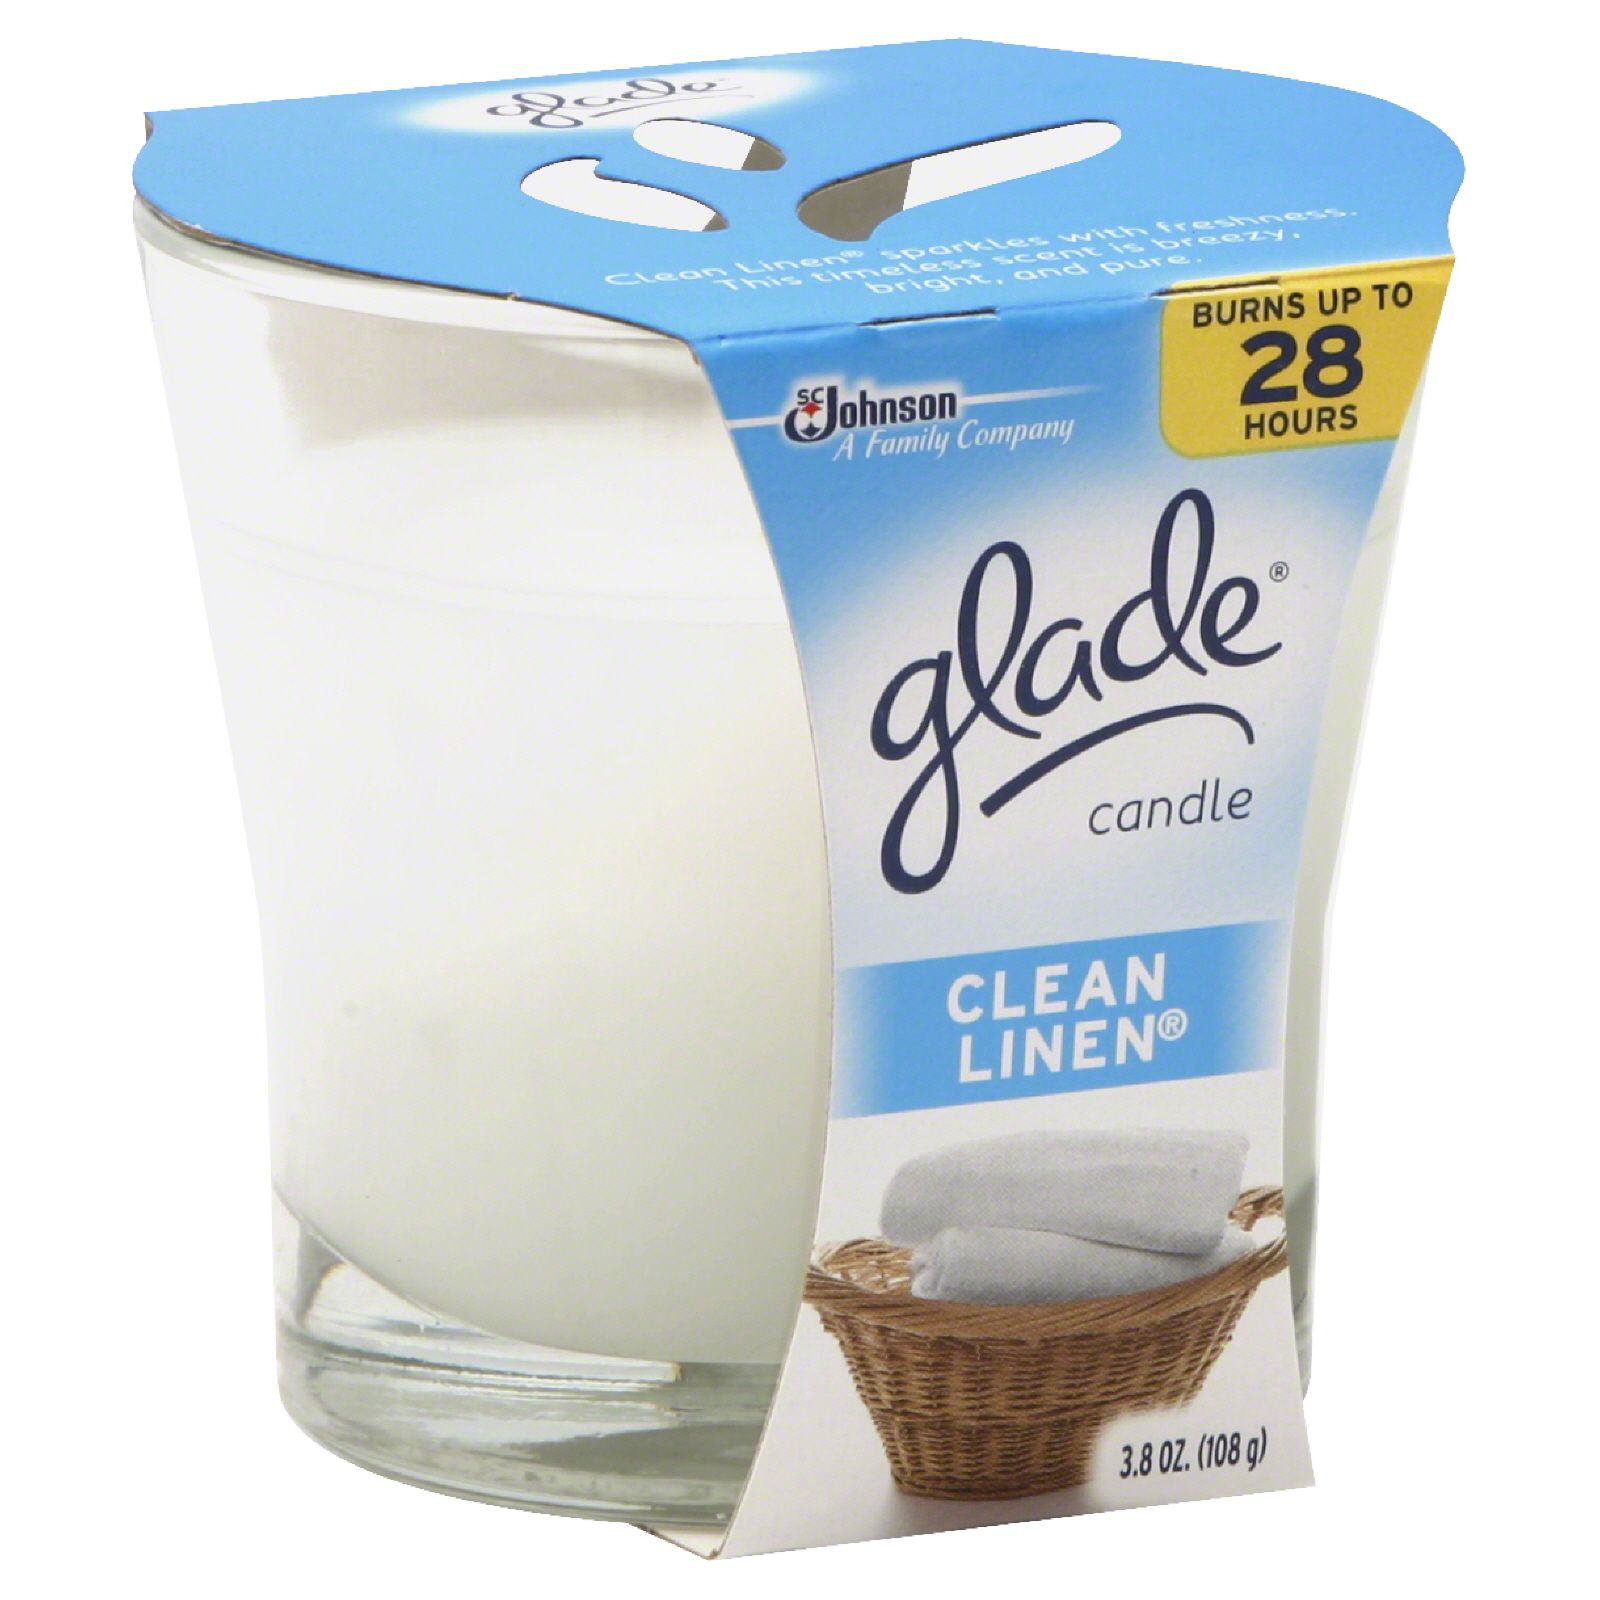 Glade Candle Clean Linen, 4 oz (108 g) | Kmart